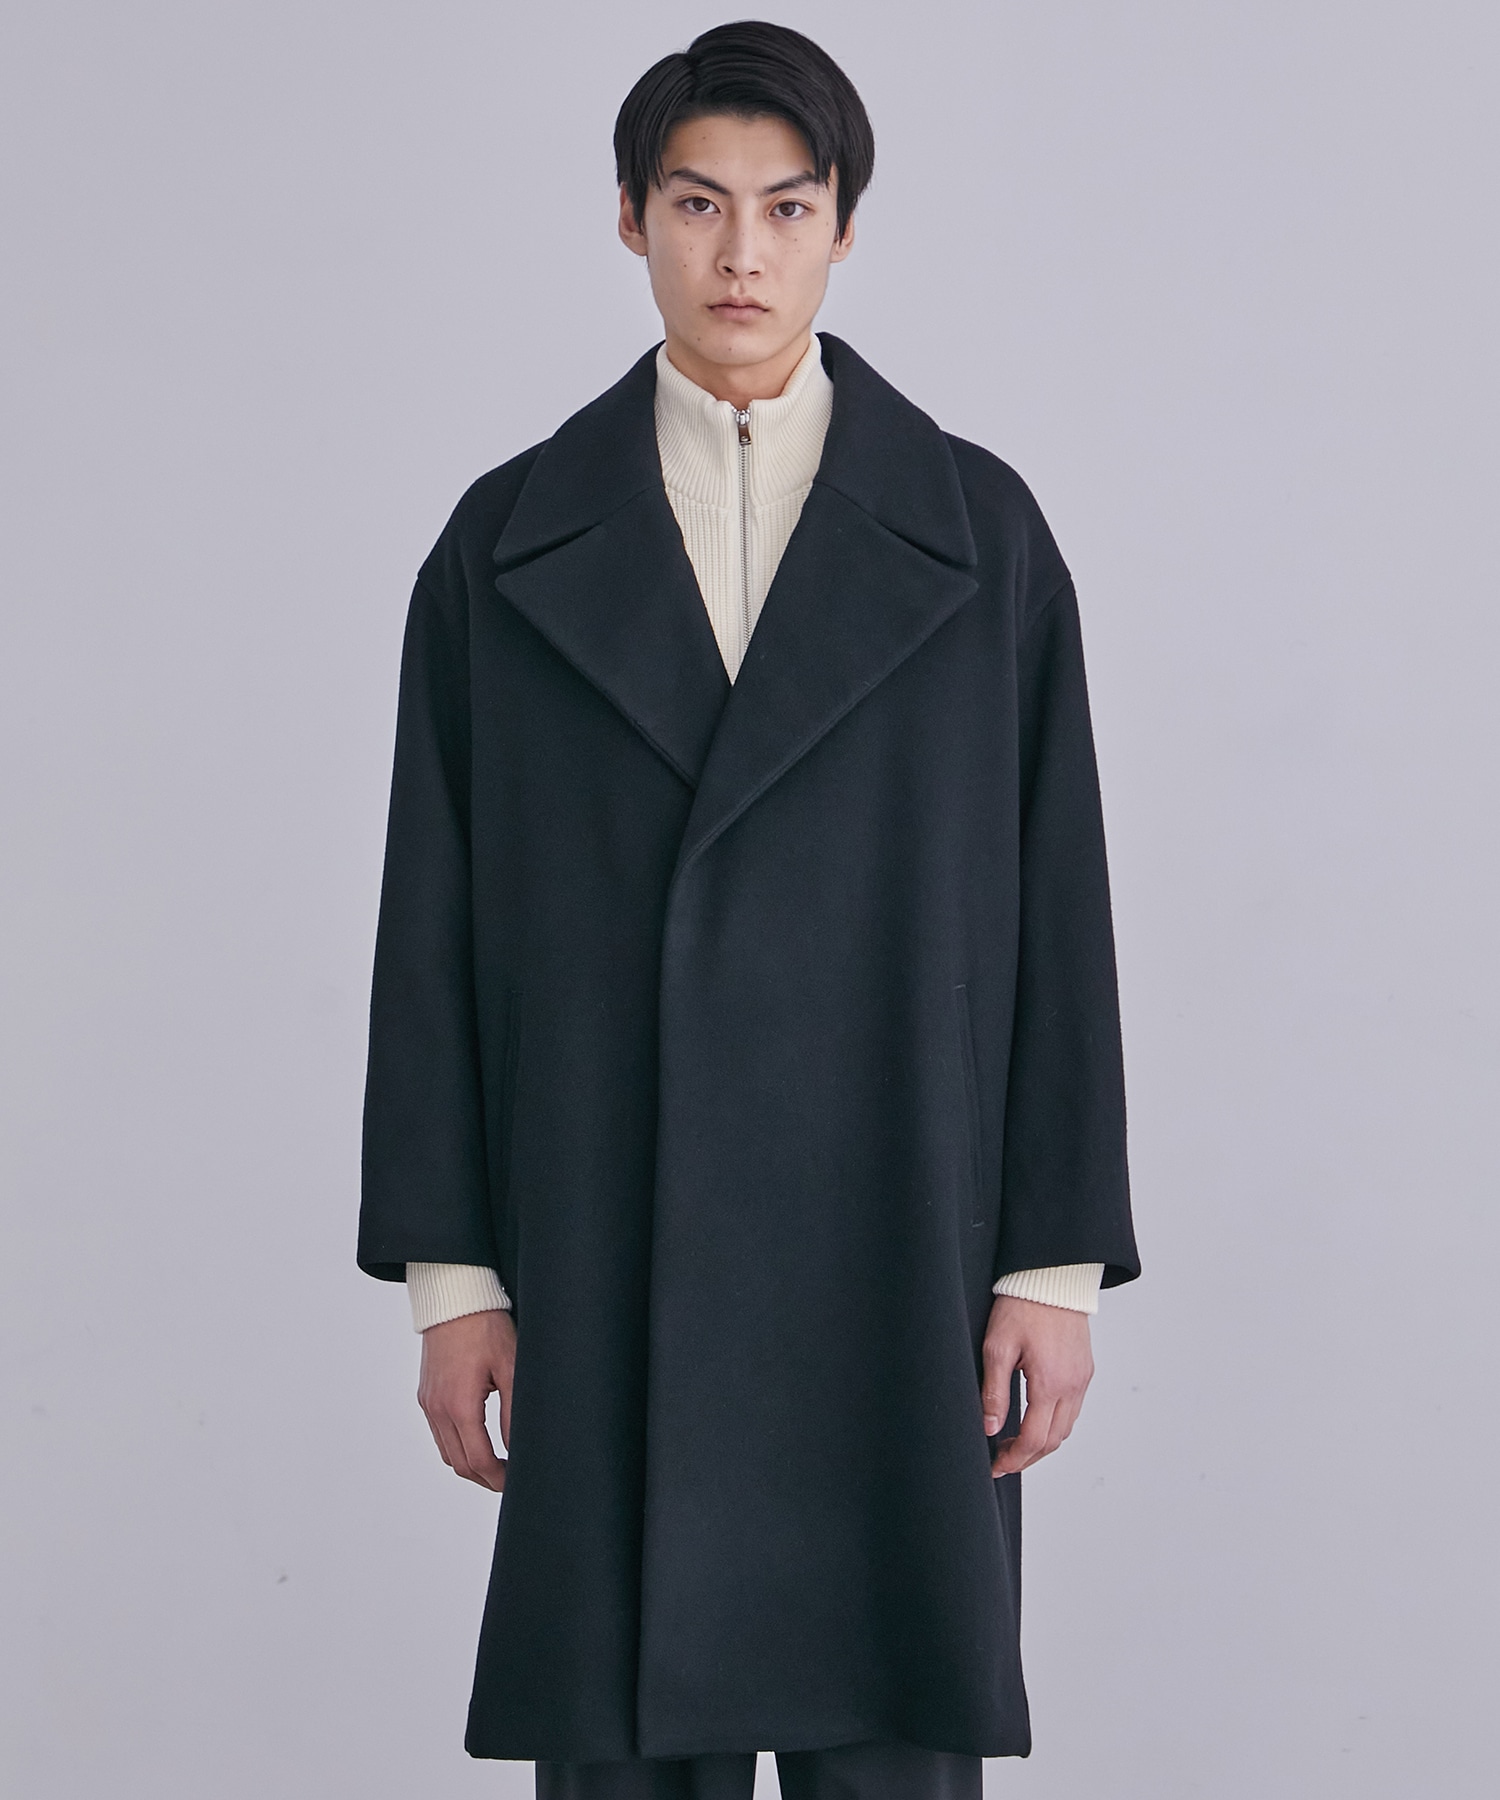 EVANGELION chesterfield coat